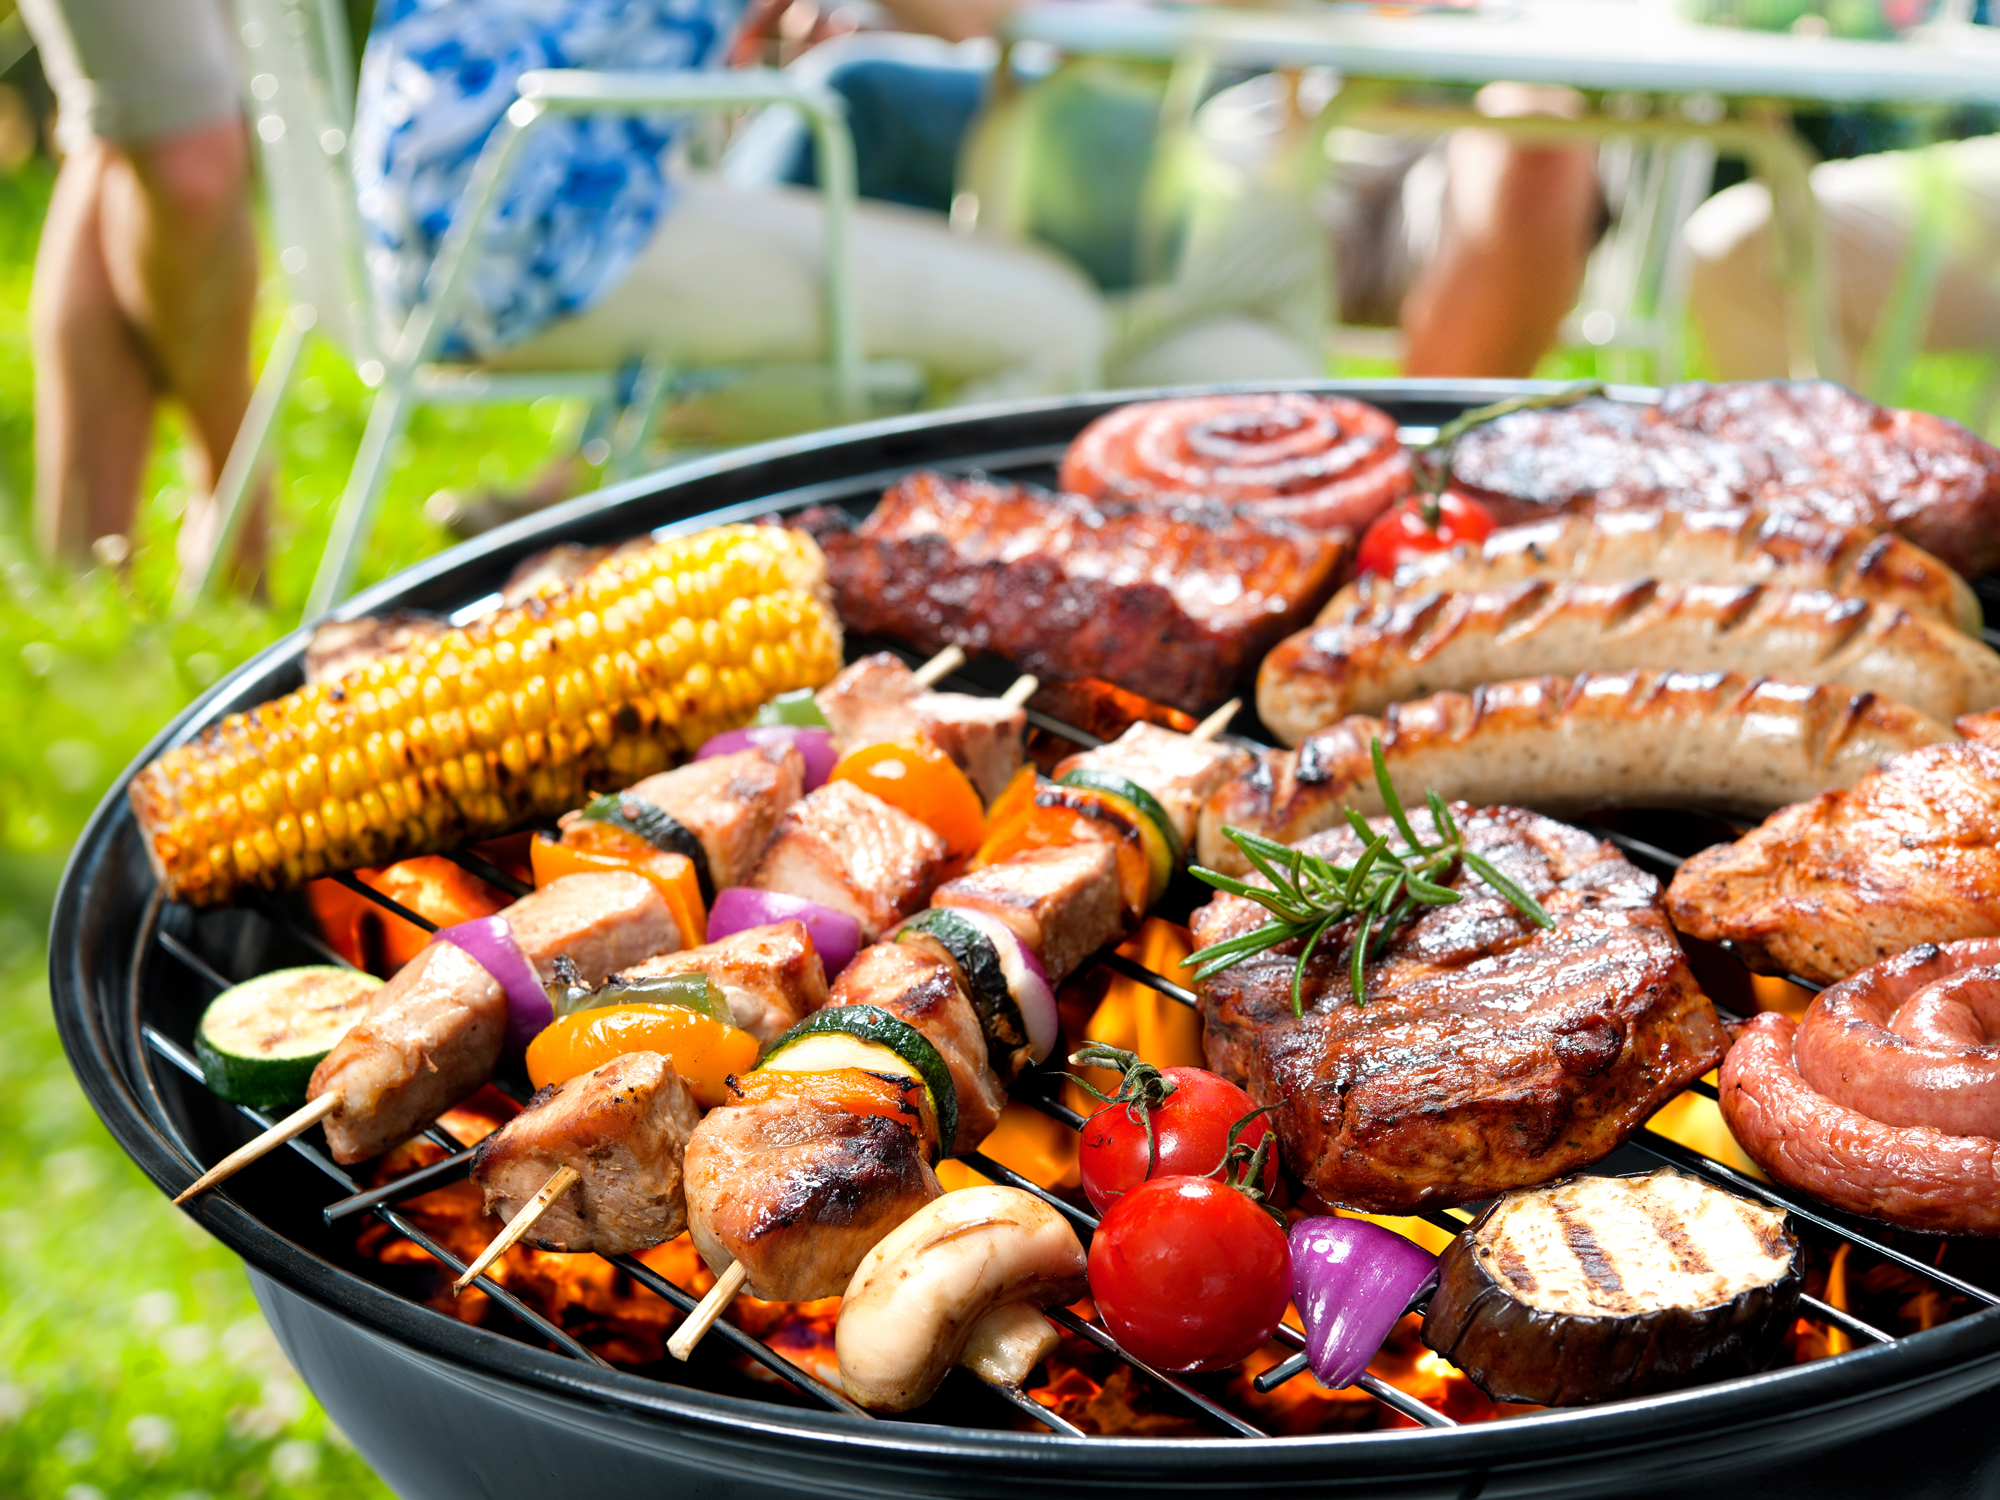 9 steps that make summer grilling healthier